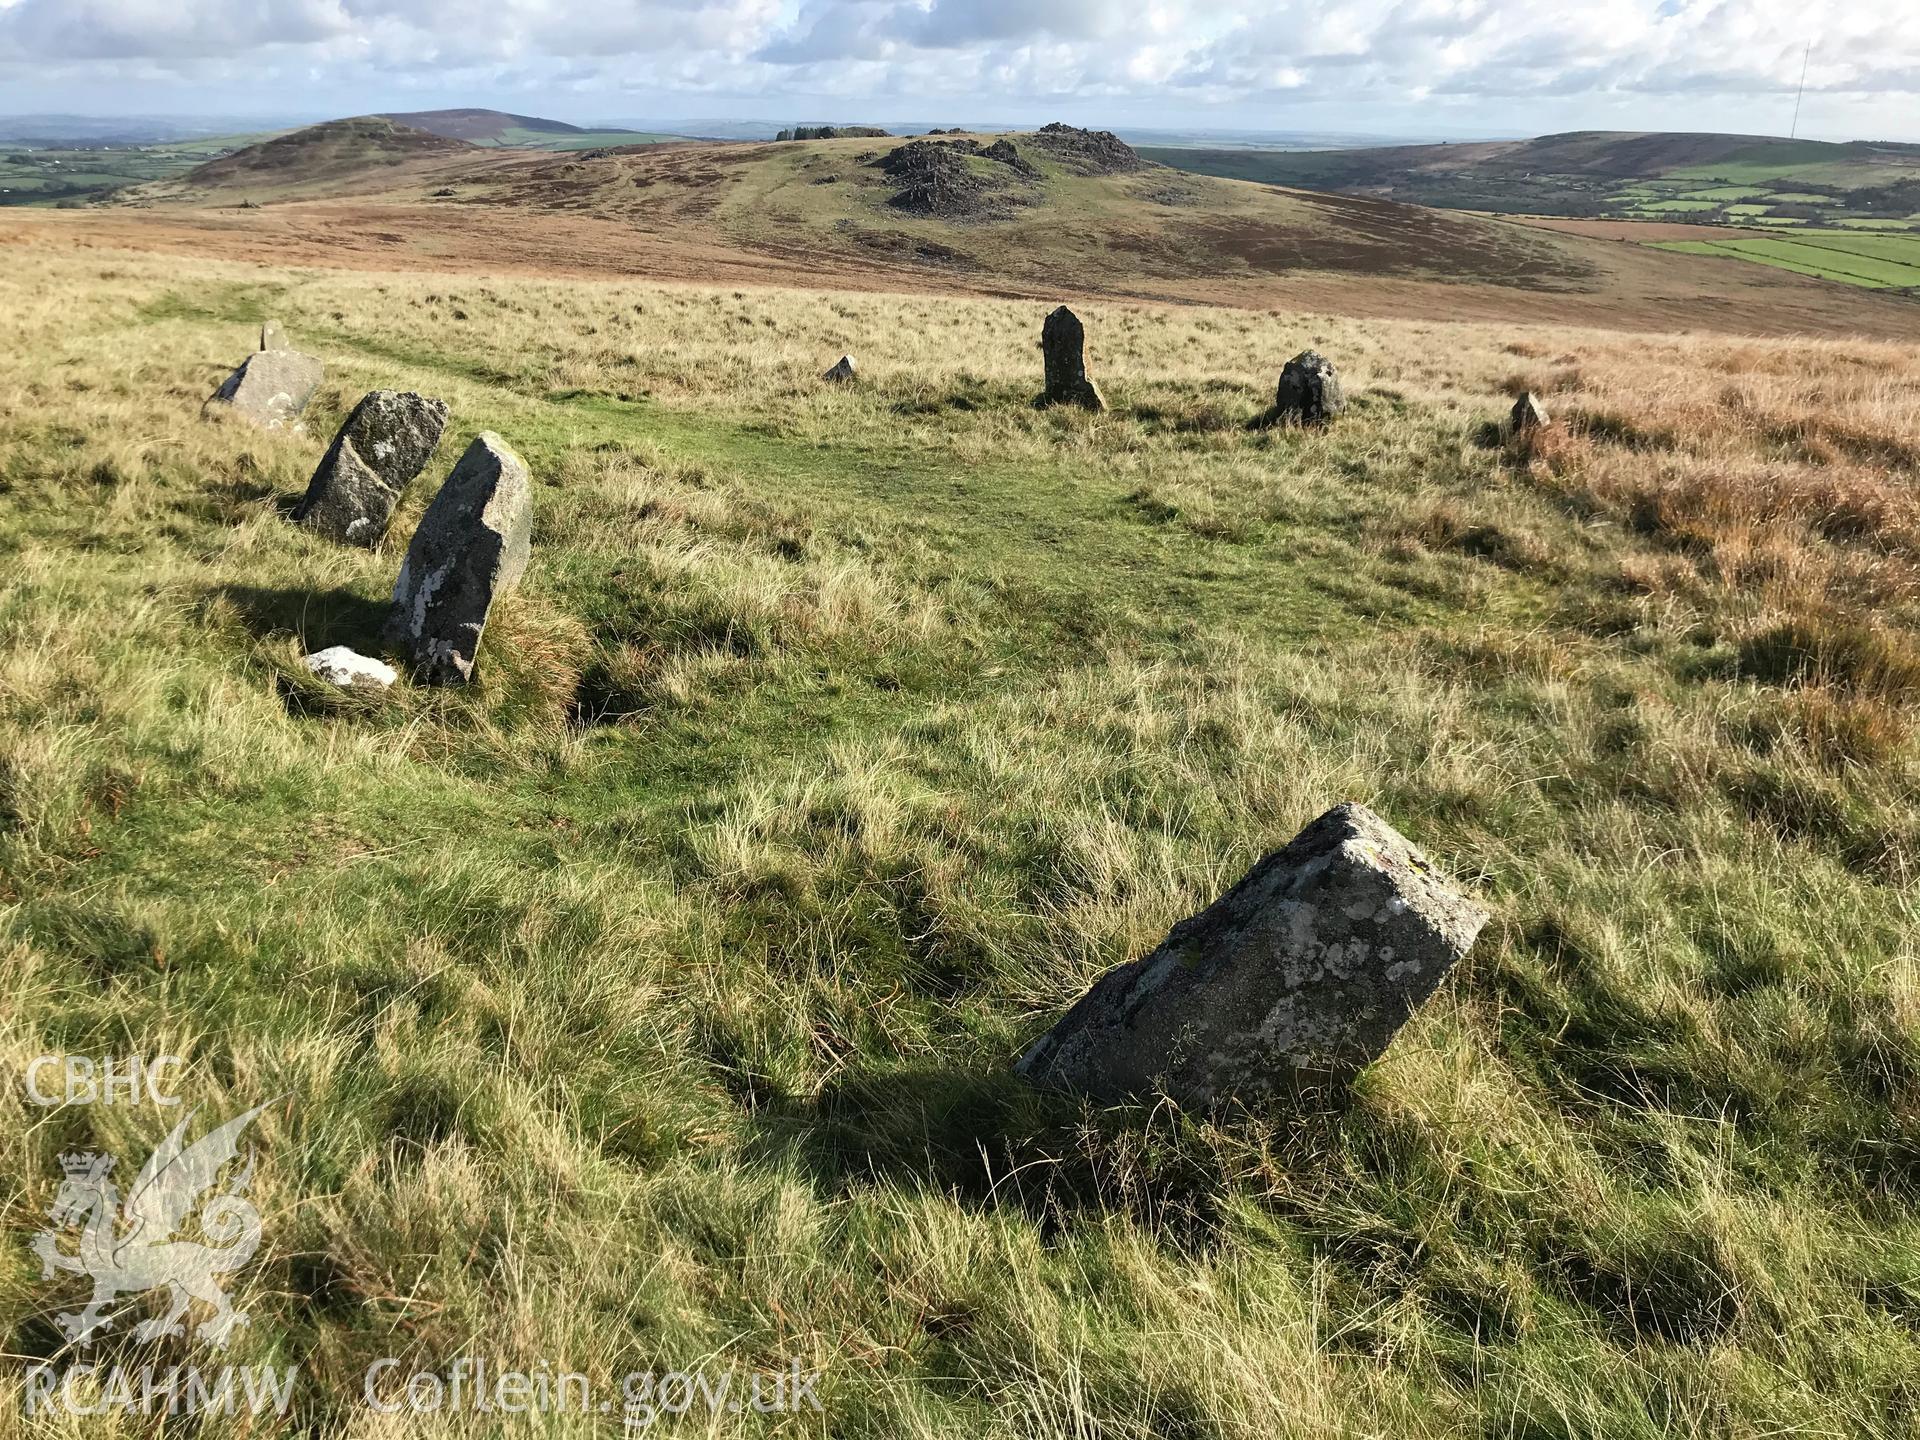 Digital colour photograph showing Bedd Arthur prehistoric ritual site, Mynachlog-Ddu, taken by Paul Davis on 22nd October 2019.